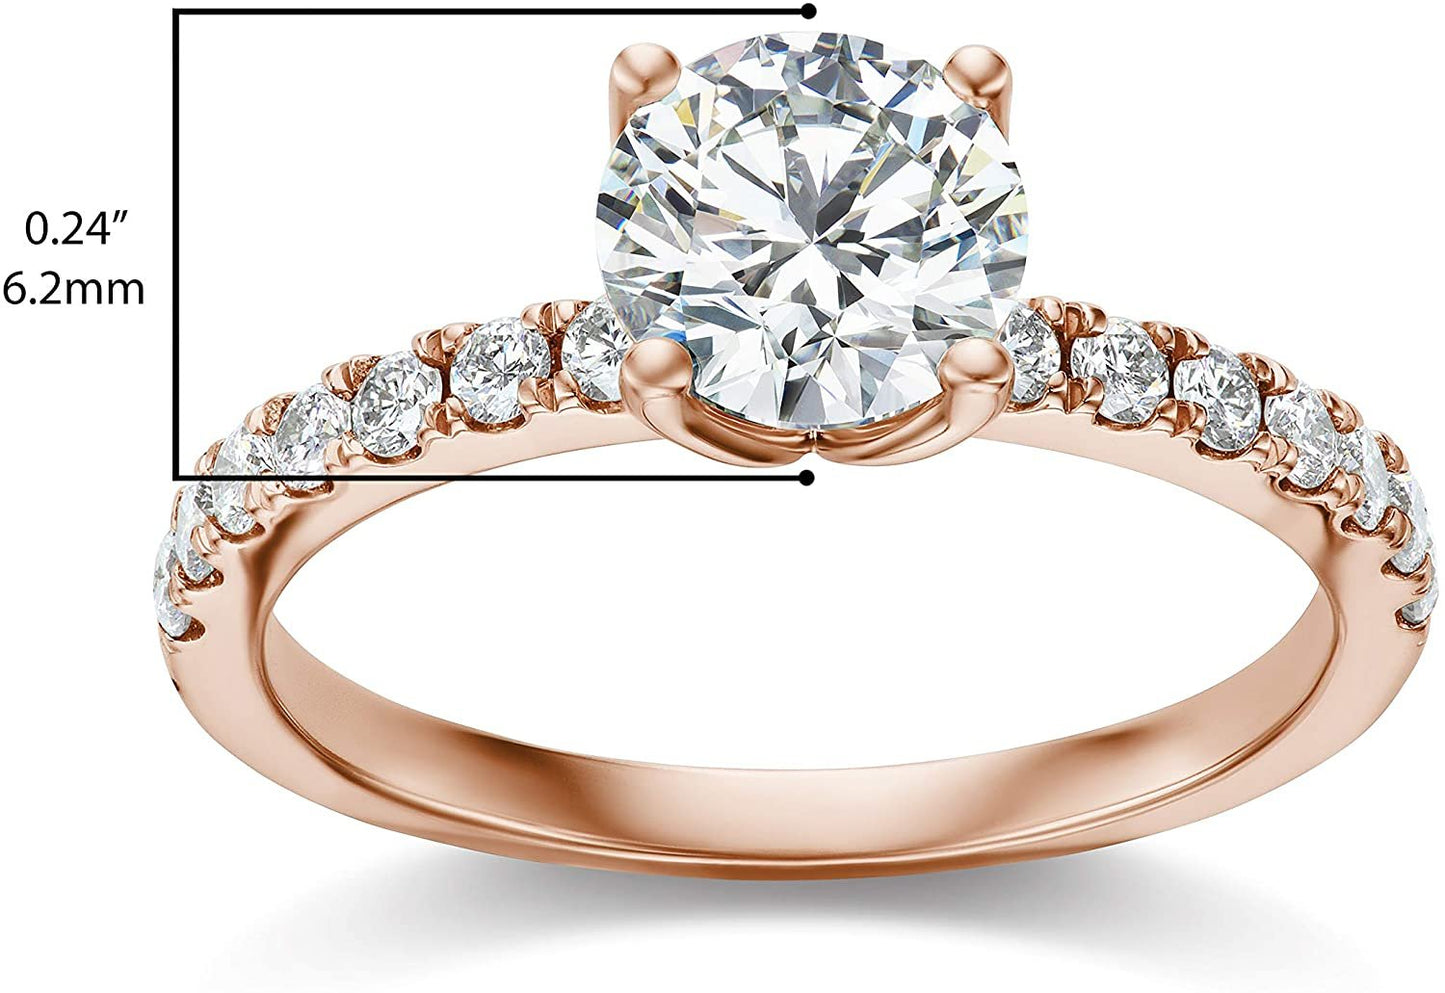 IGI Certified 14K Rose Gold 1.0+ Cttw Brilliant-Cut Lab Created Diamond Solitaire Engagement Ring with Pavé-Set Band (9/10 Carat Center: I-J Color, VS1-VS2 Clarity) - Size 8-3/4